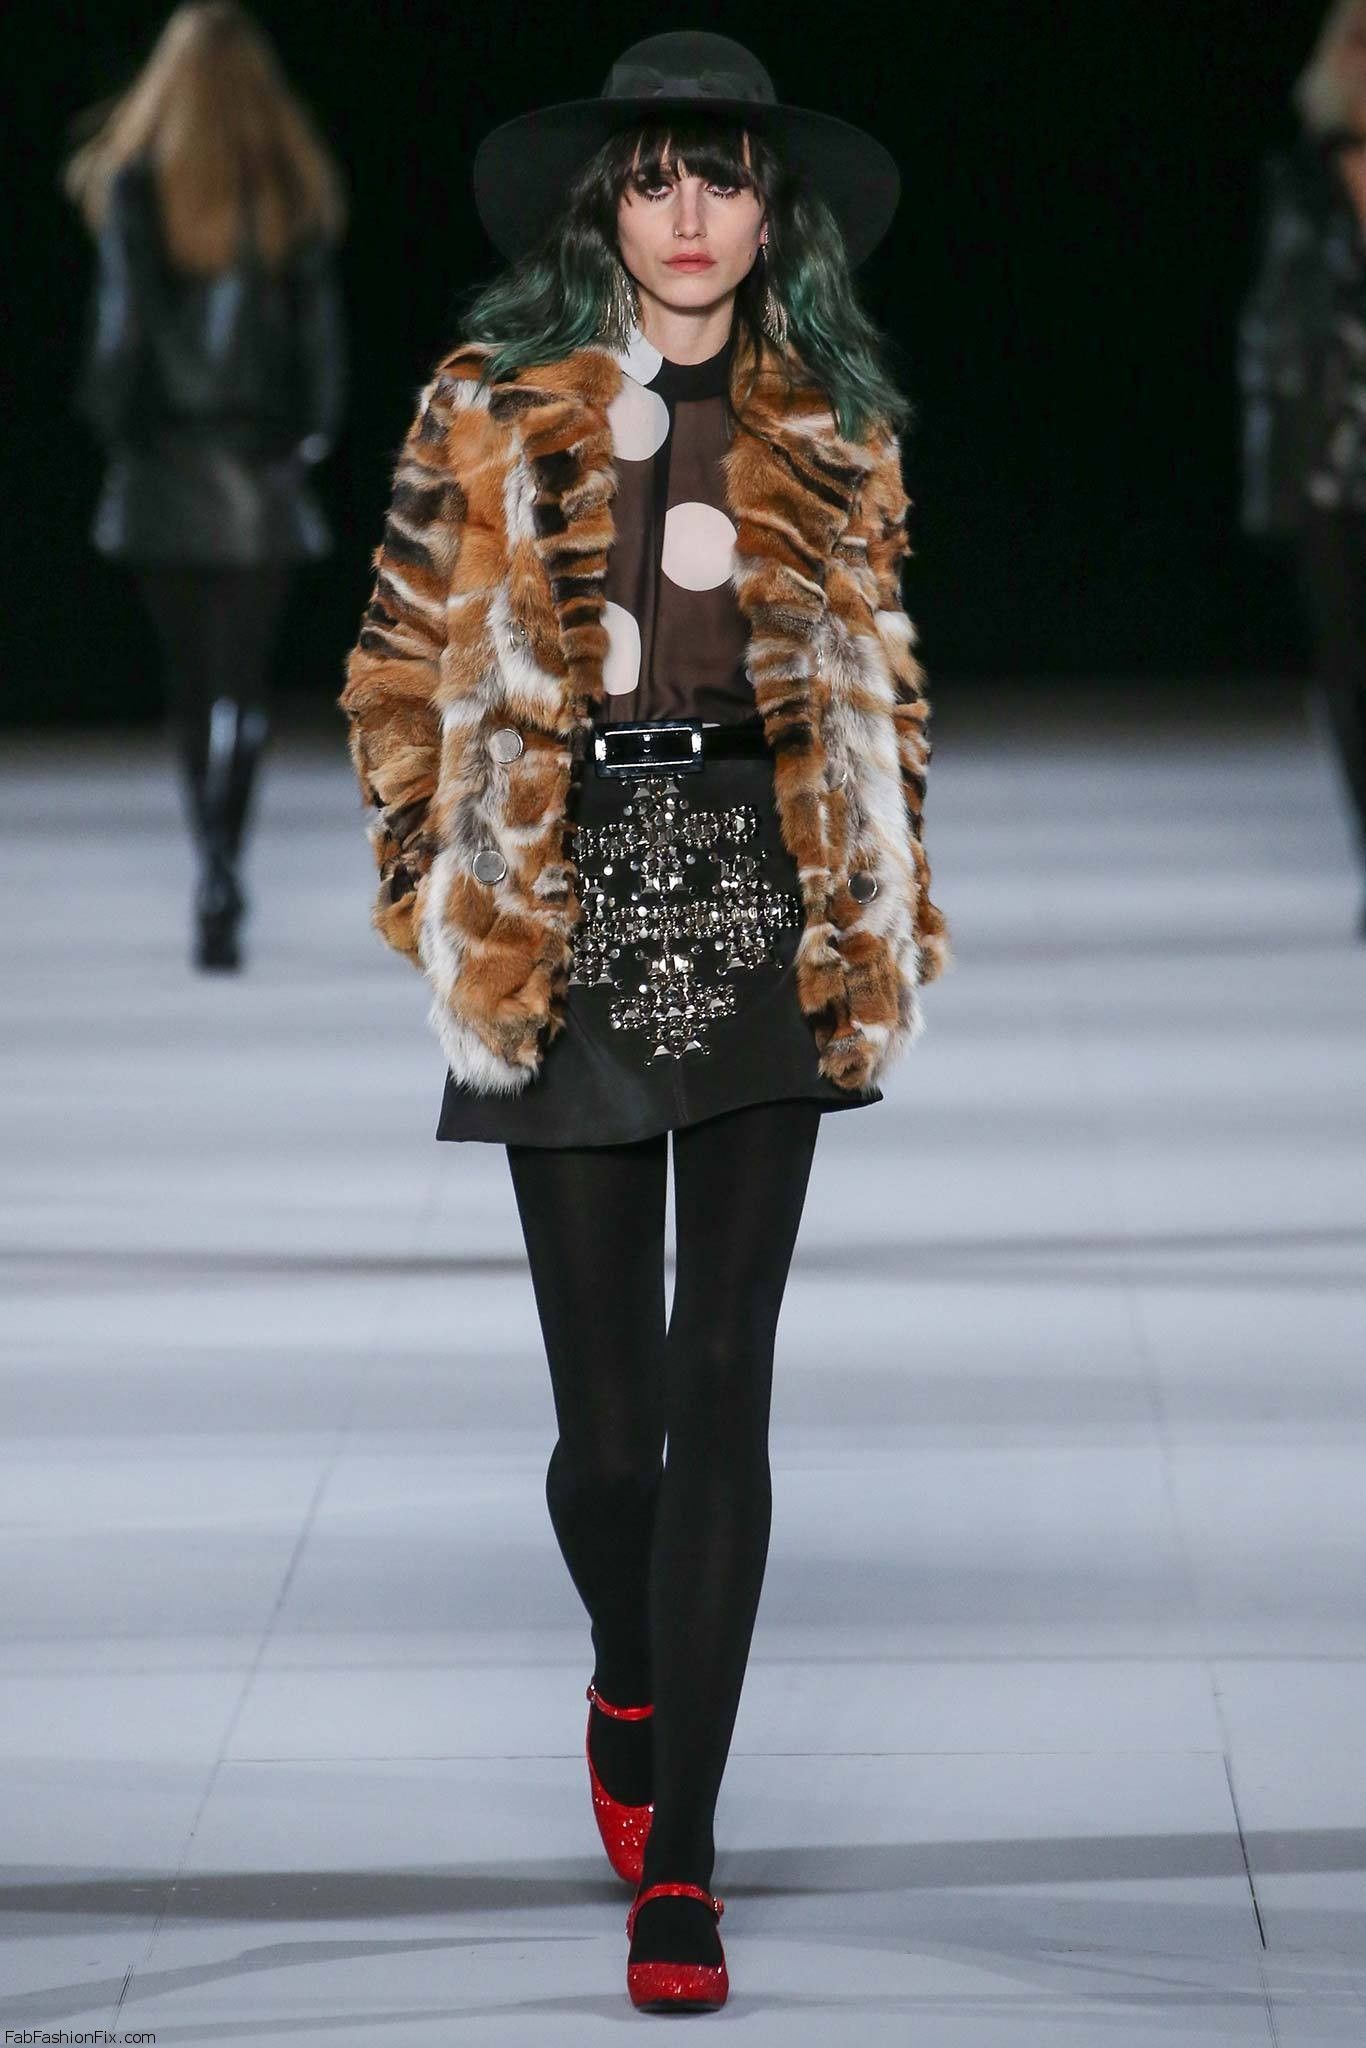 Saint Laurent fall/winter 2014 collection – Paris fashion week | Fab ...